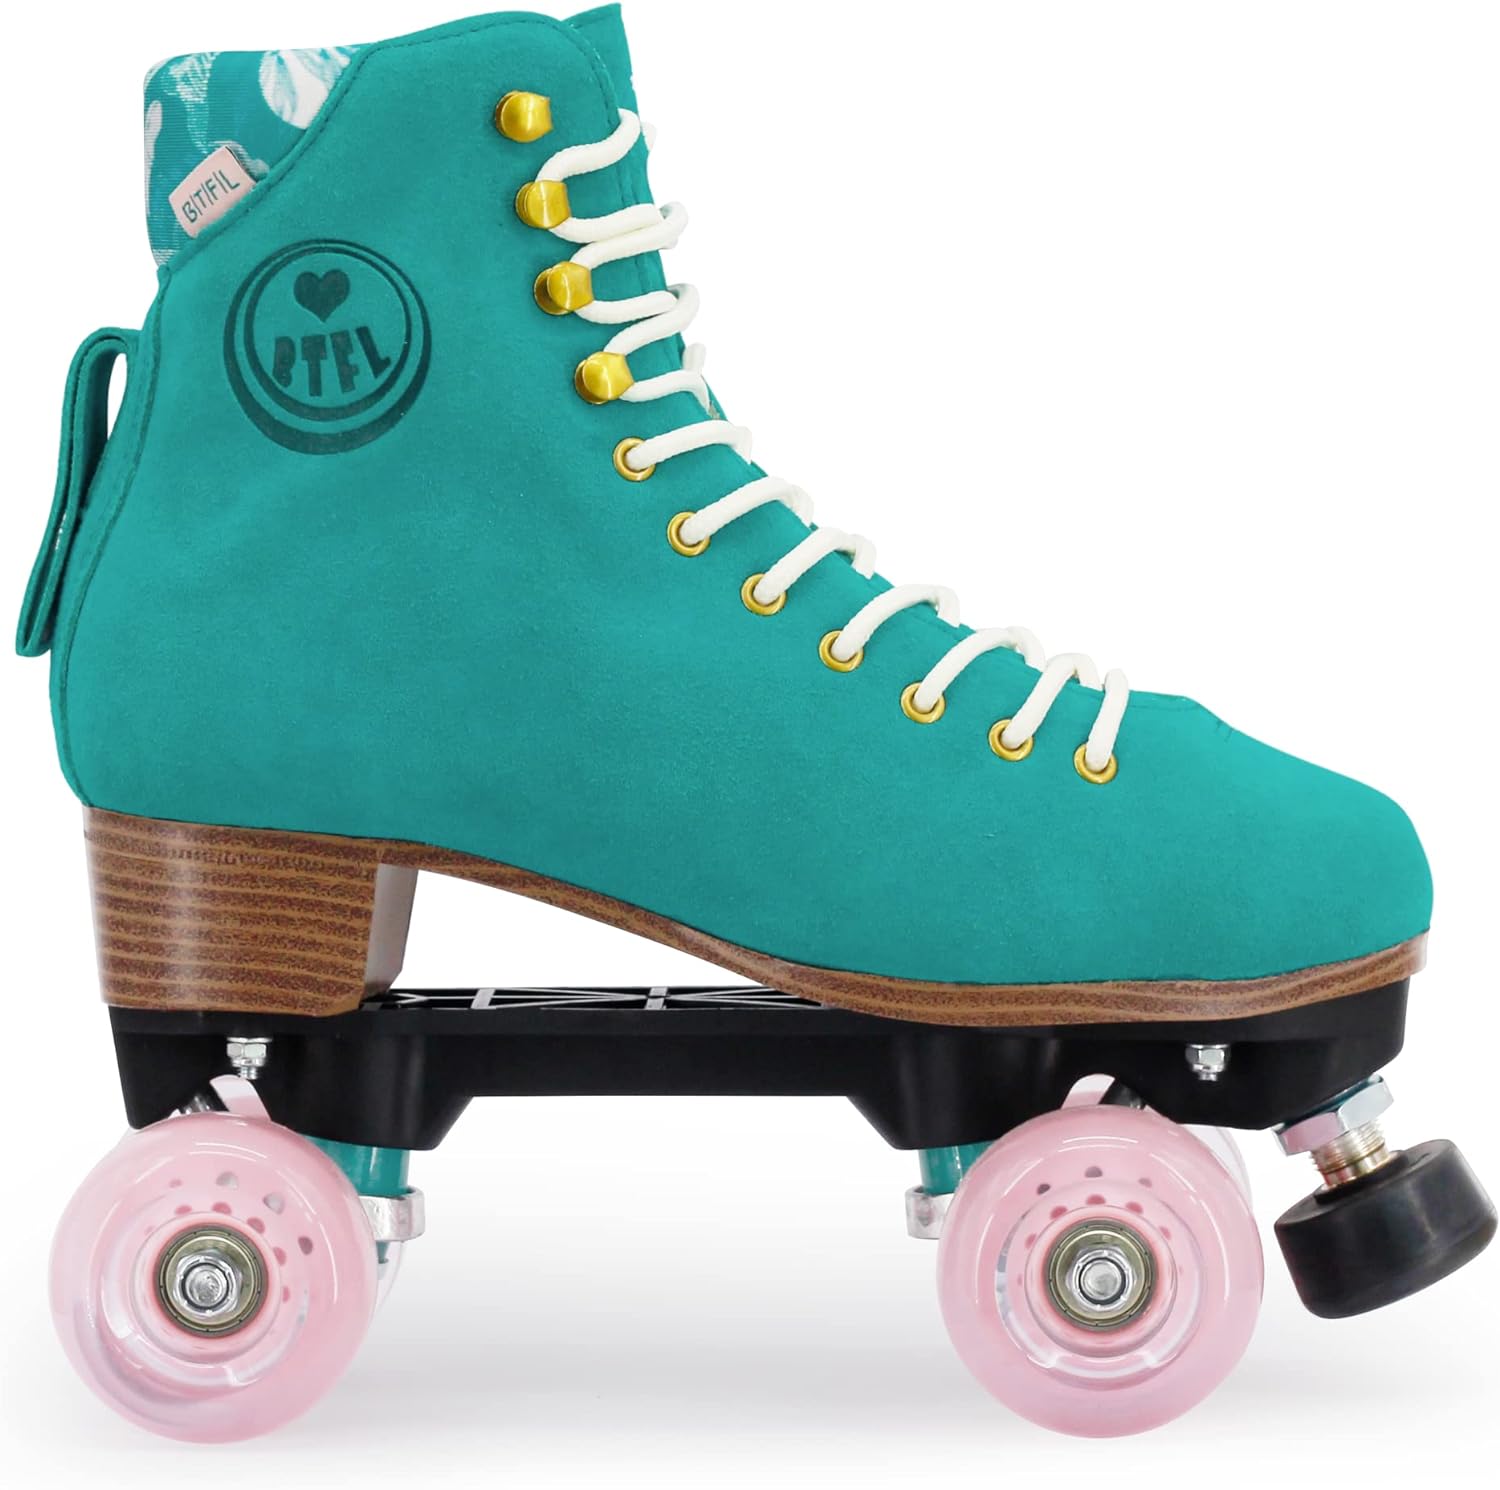 Ideal for Rink Roller Skates for Women with Hight Adjustable stoppers Artistic and Rythmic Skating BTFL Scarlett Pro